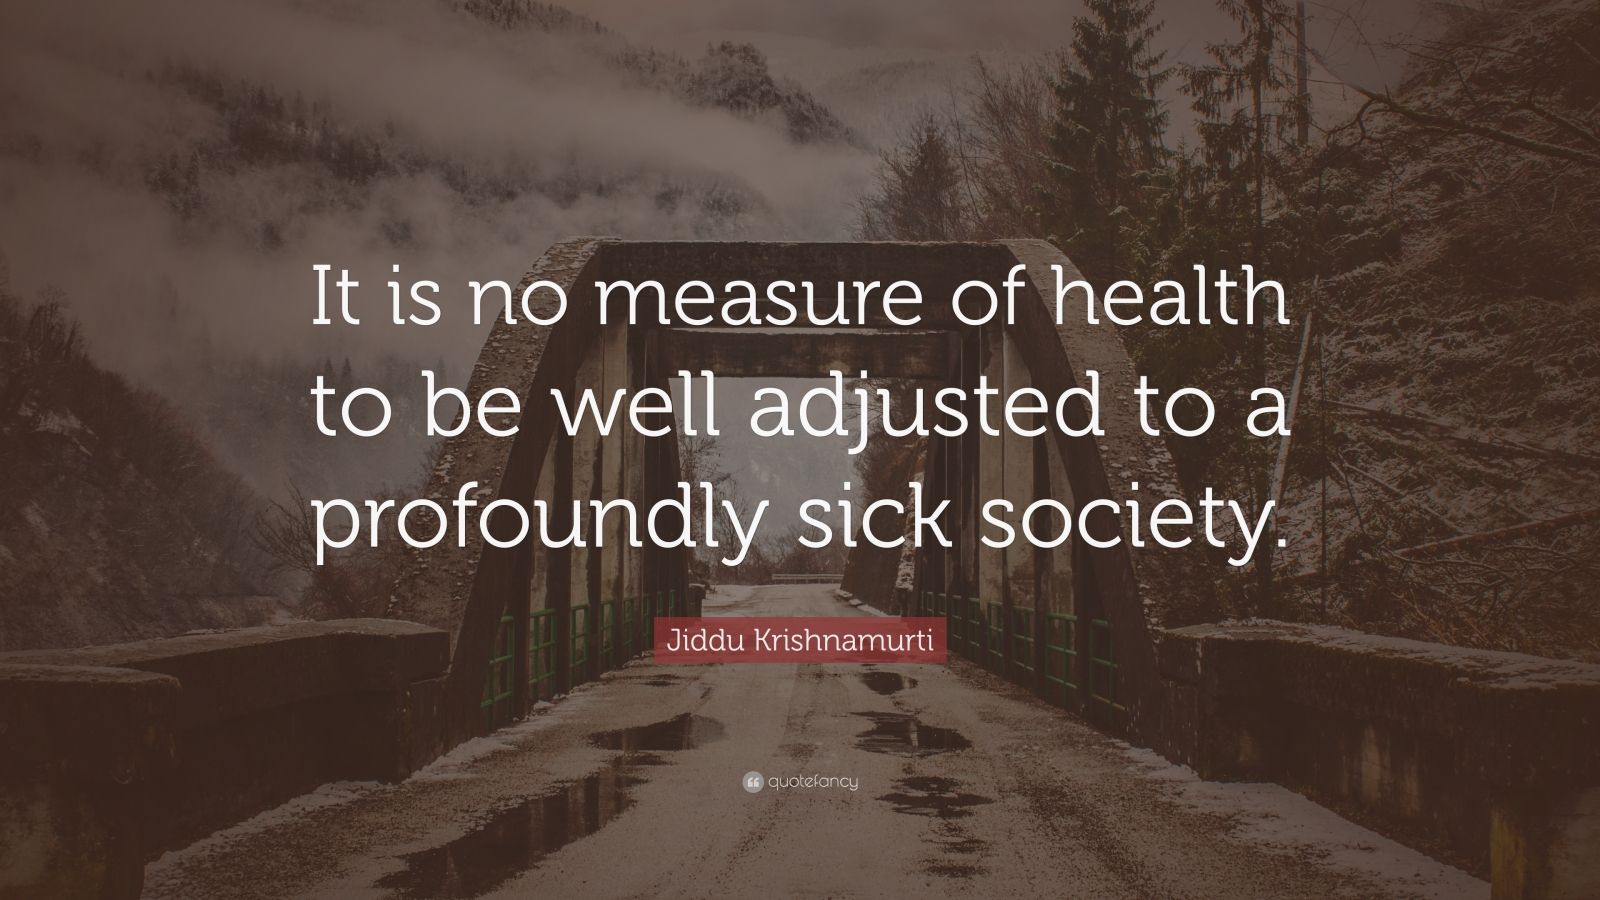 Jiddu Krishnamurti Quote: “It is no measure of health to be well